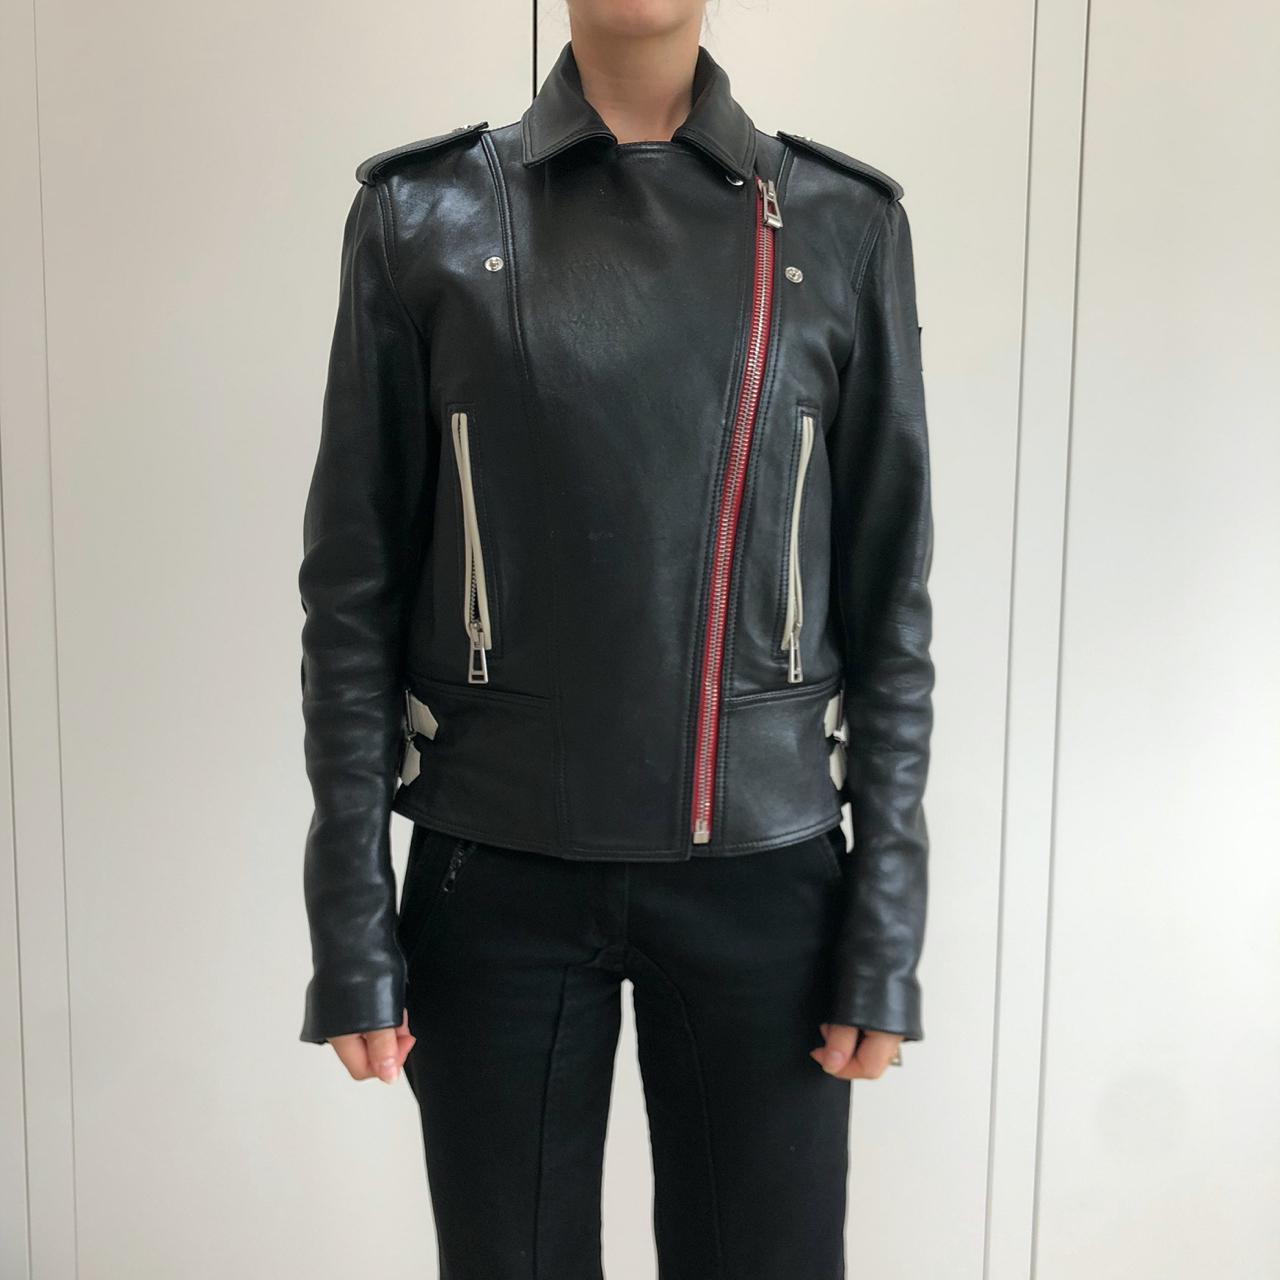 Belstaff Marianne leather jacket. Size 12 but model... - Depop